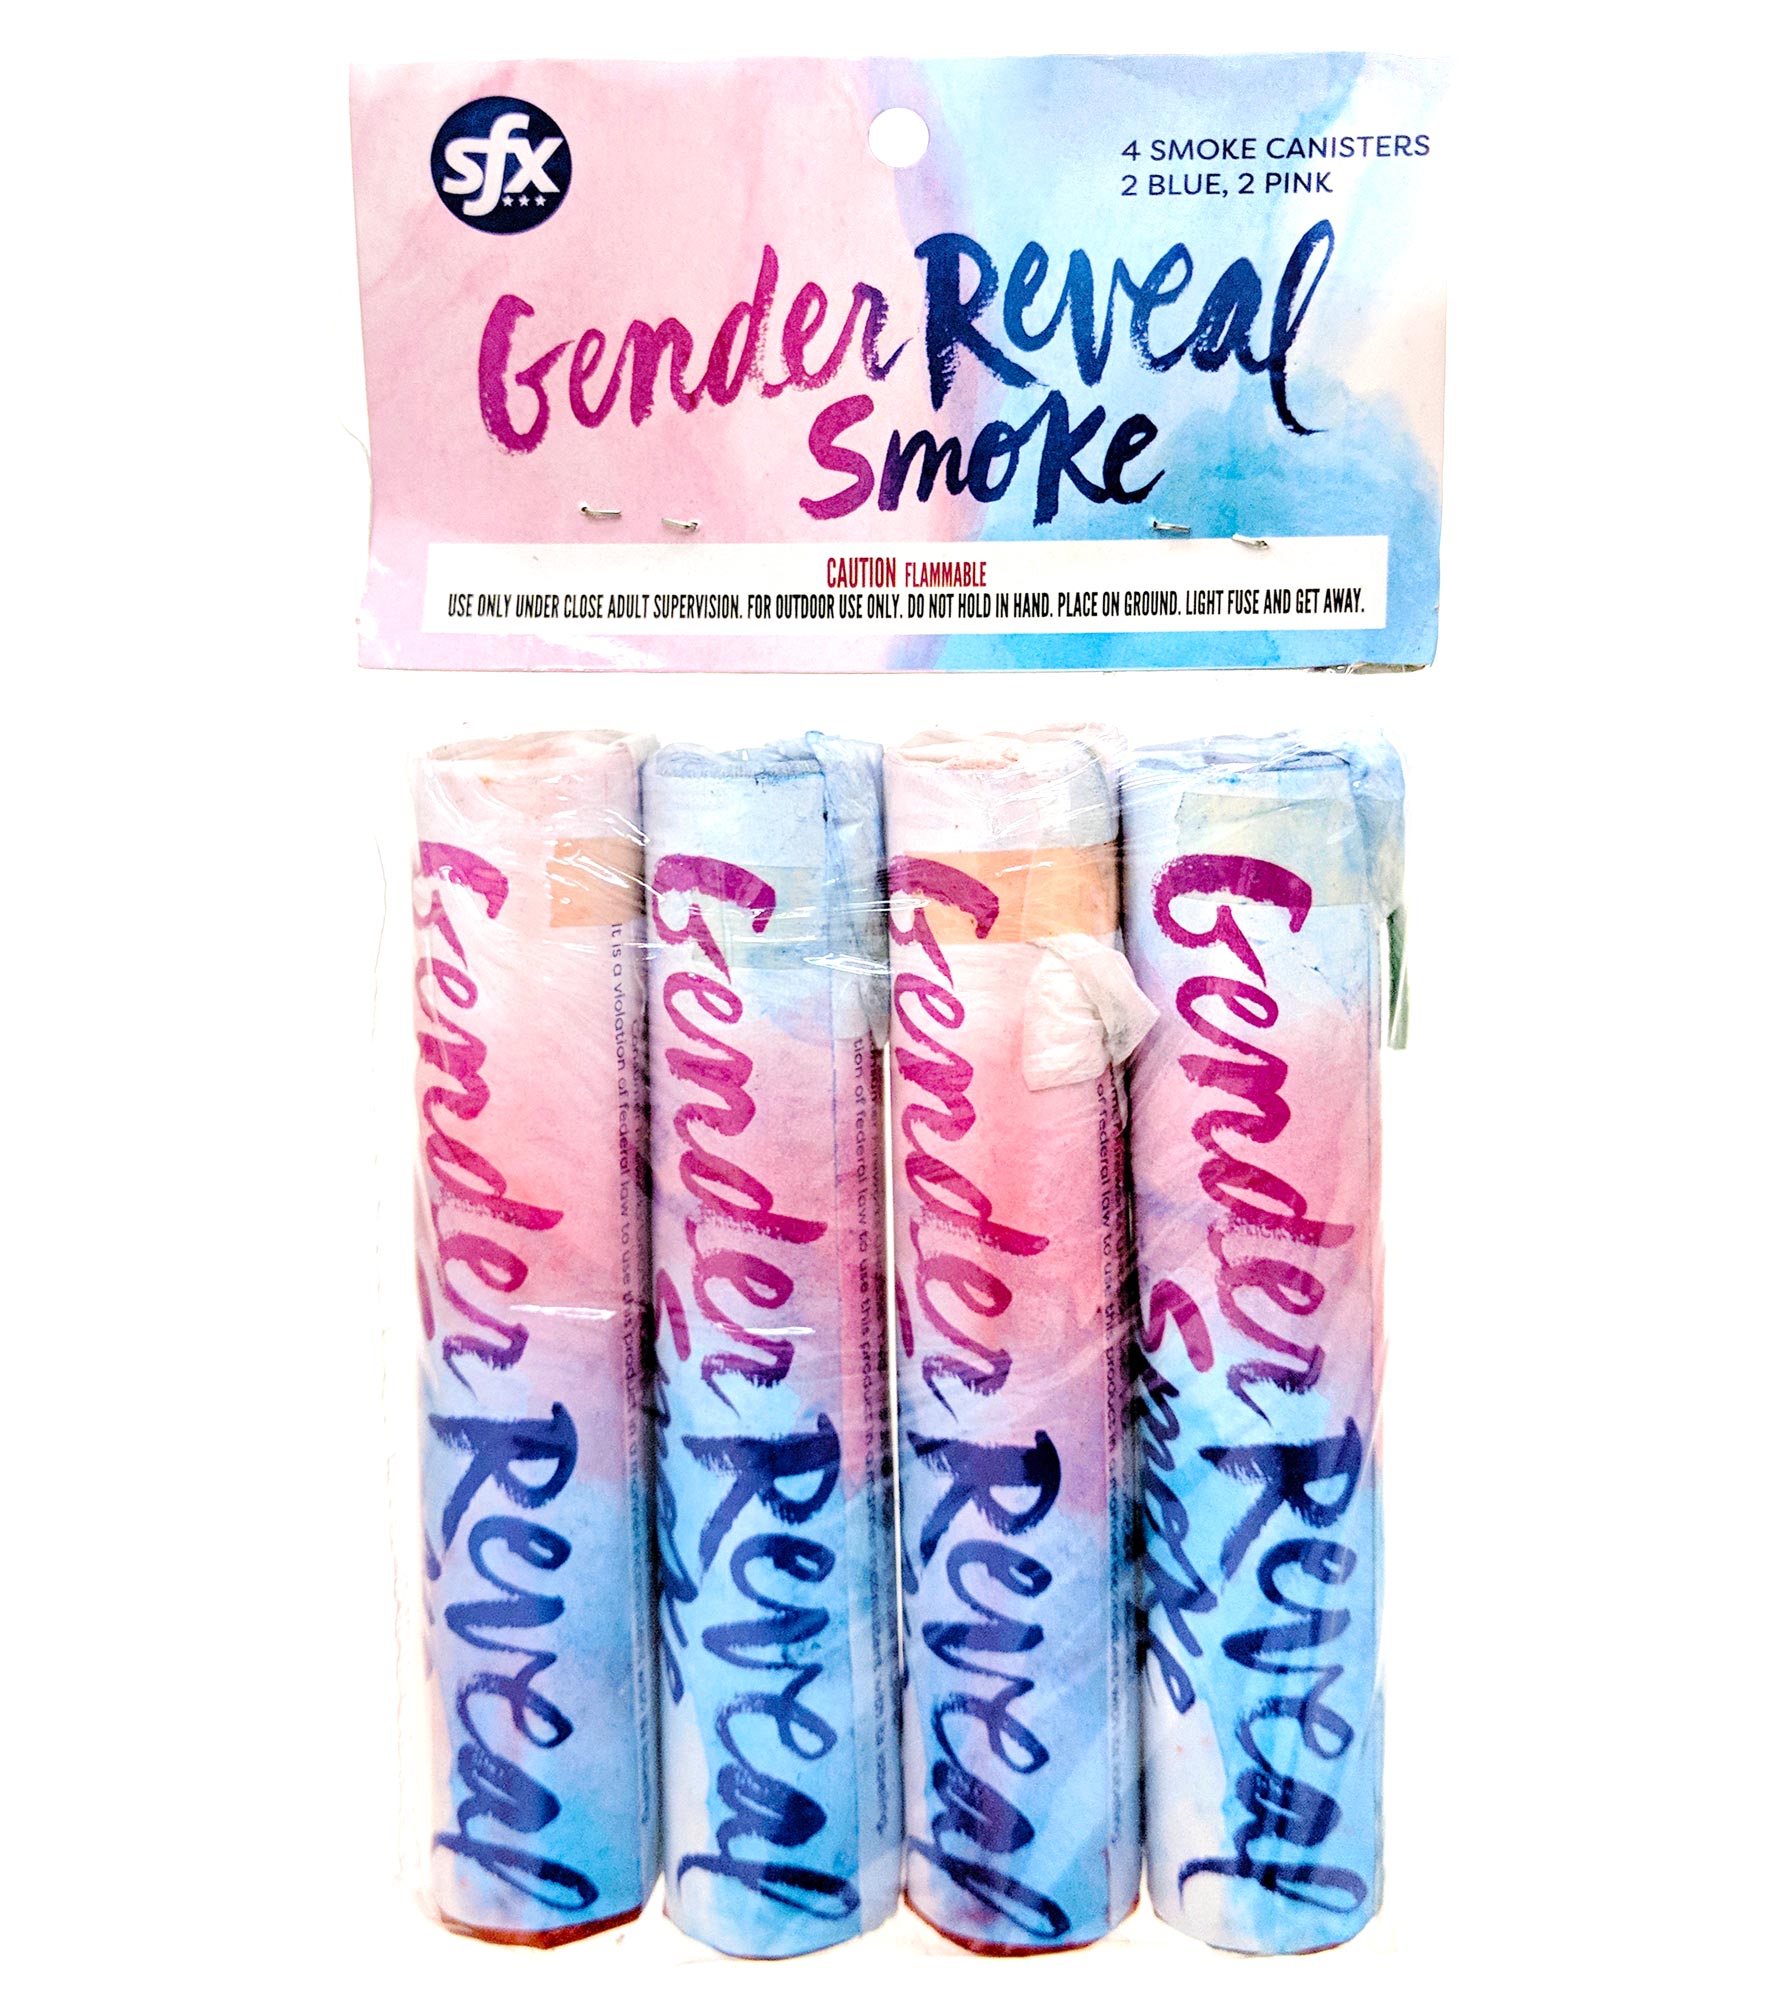 Gender Reveal Smoke